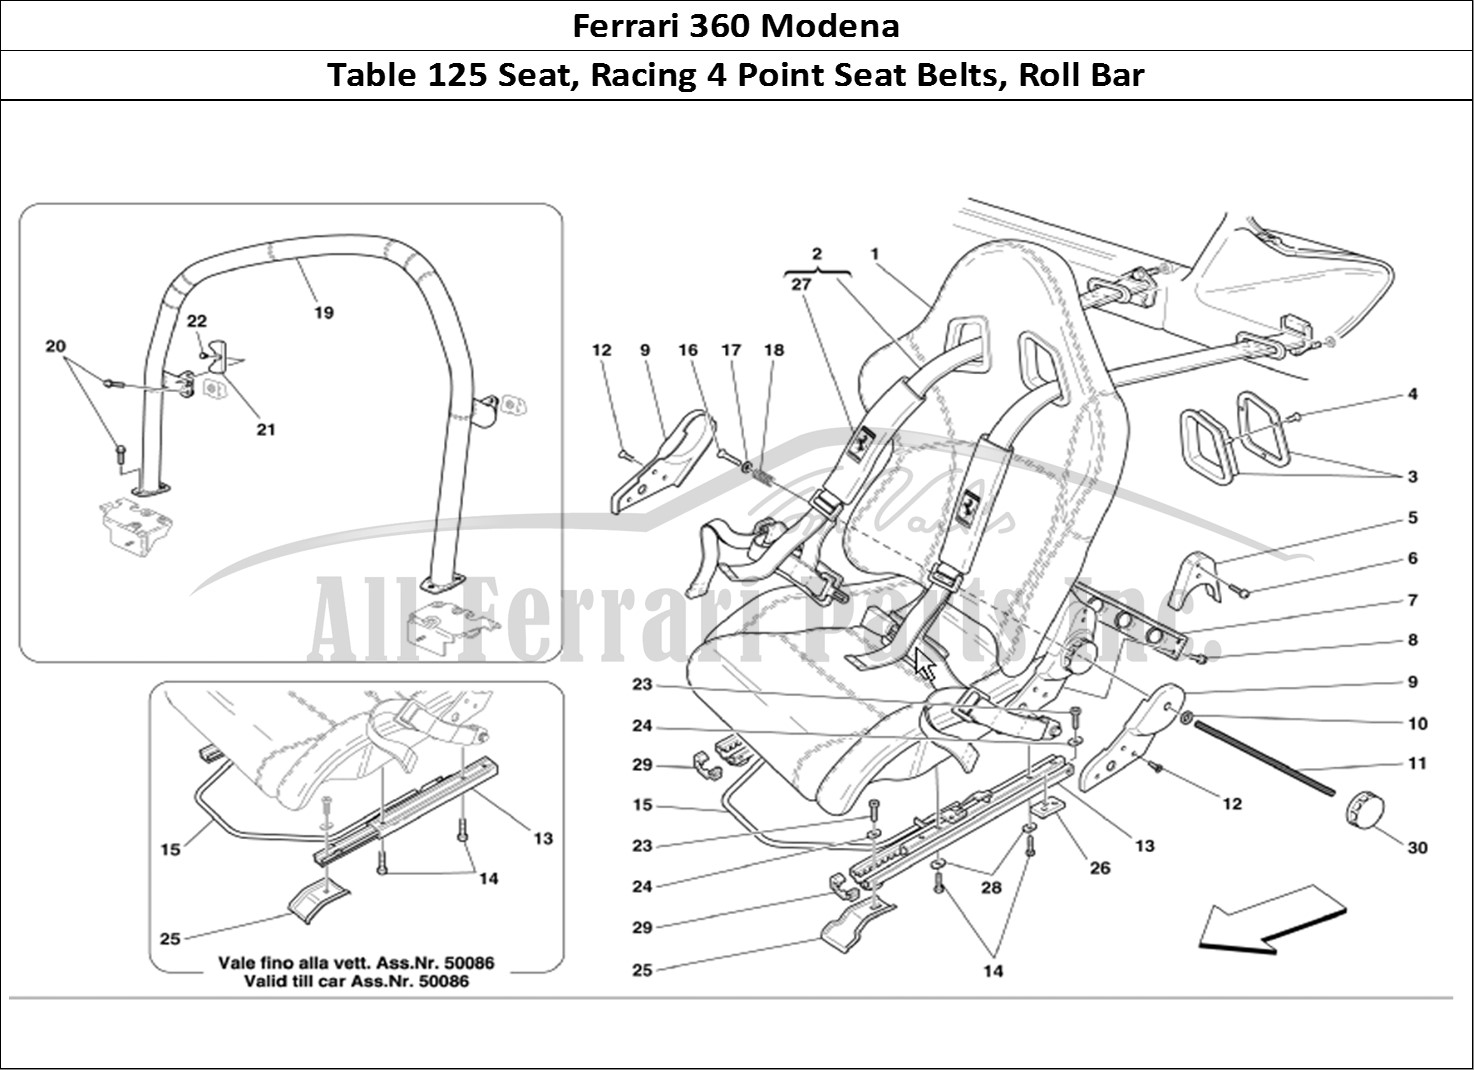 Ferrari Parts Ferrari 360 Modena Page 125 Racing Seat-4 Point Belts